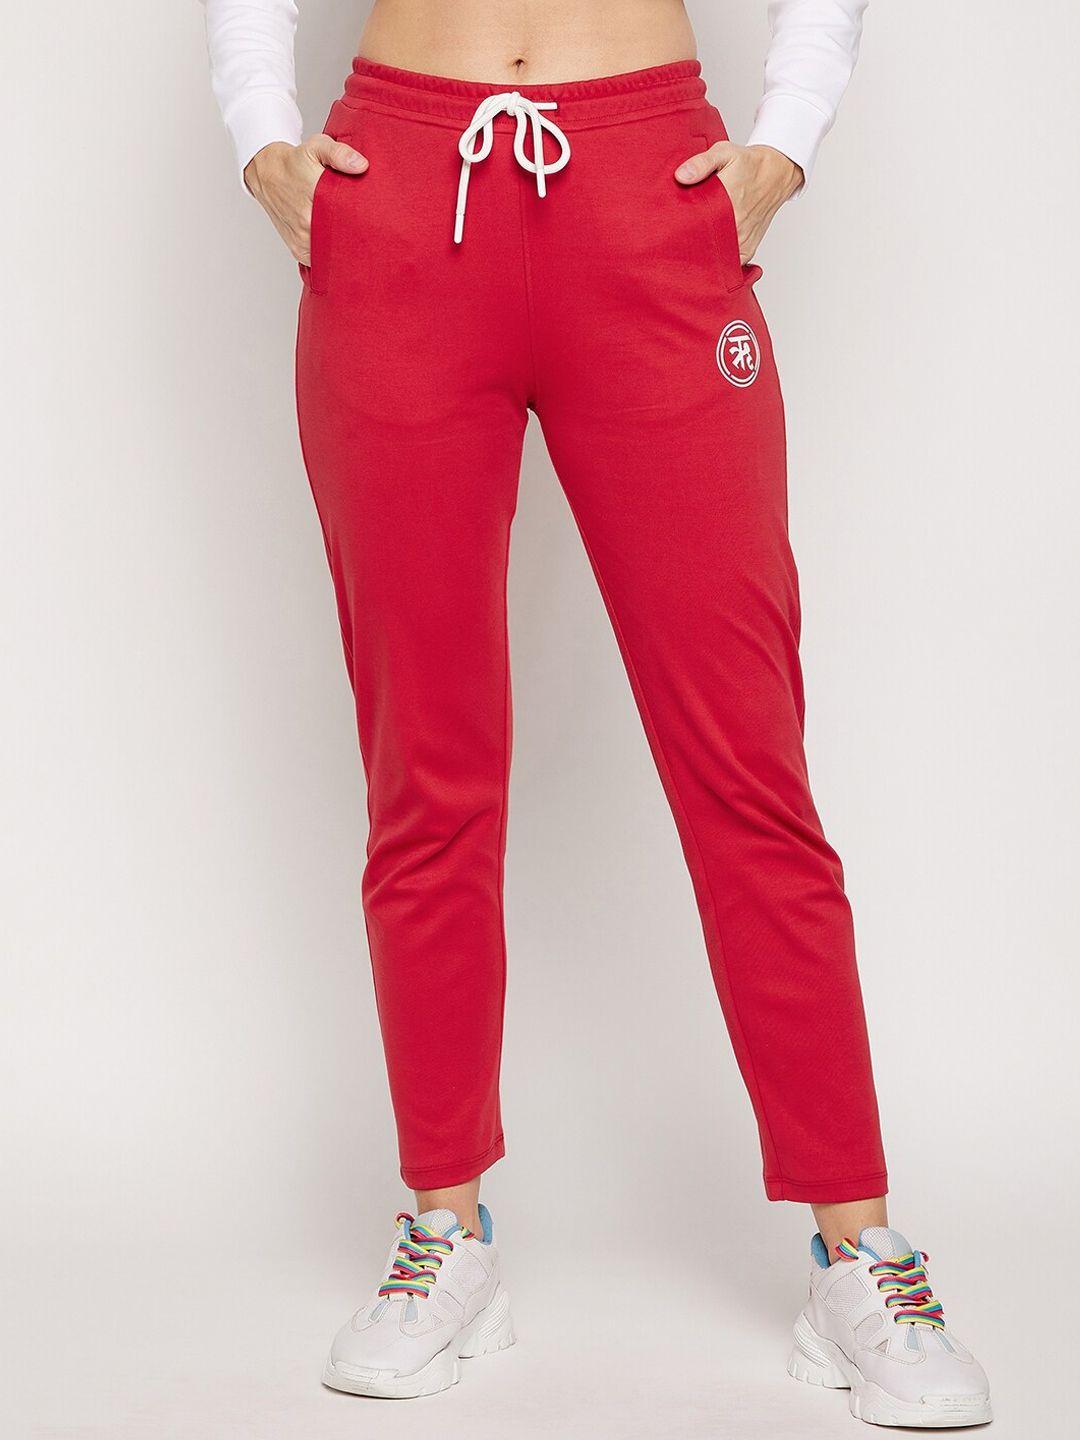 edrio-women-red-solid-slim-fit-track-pants